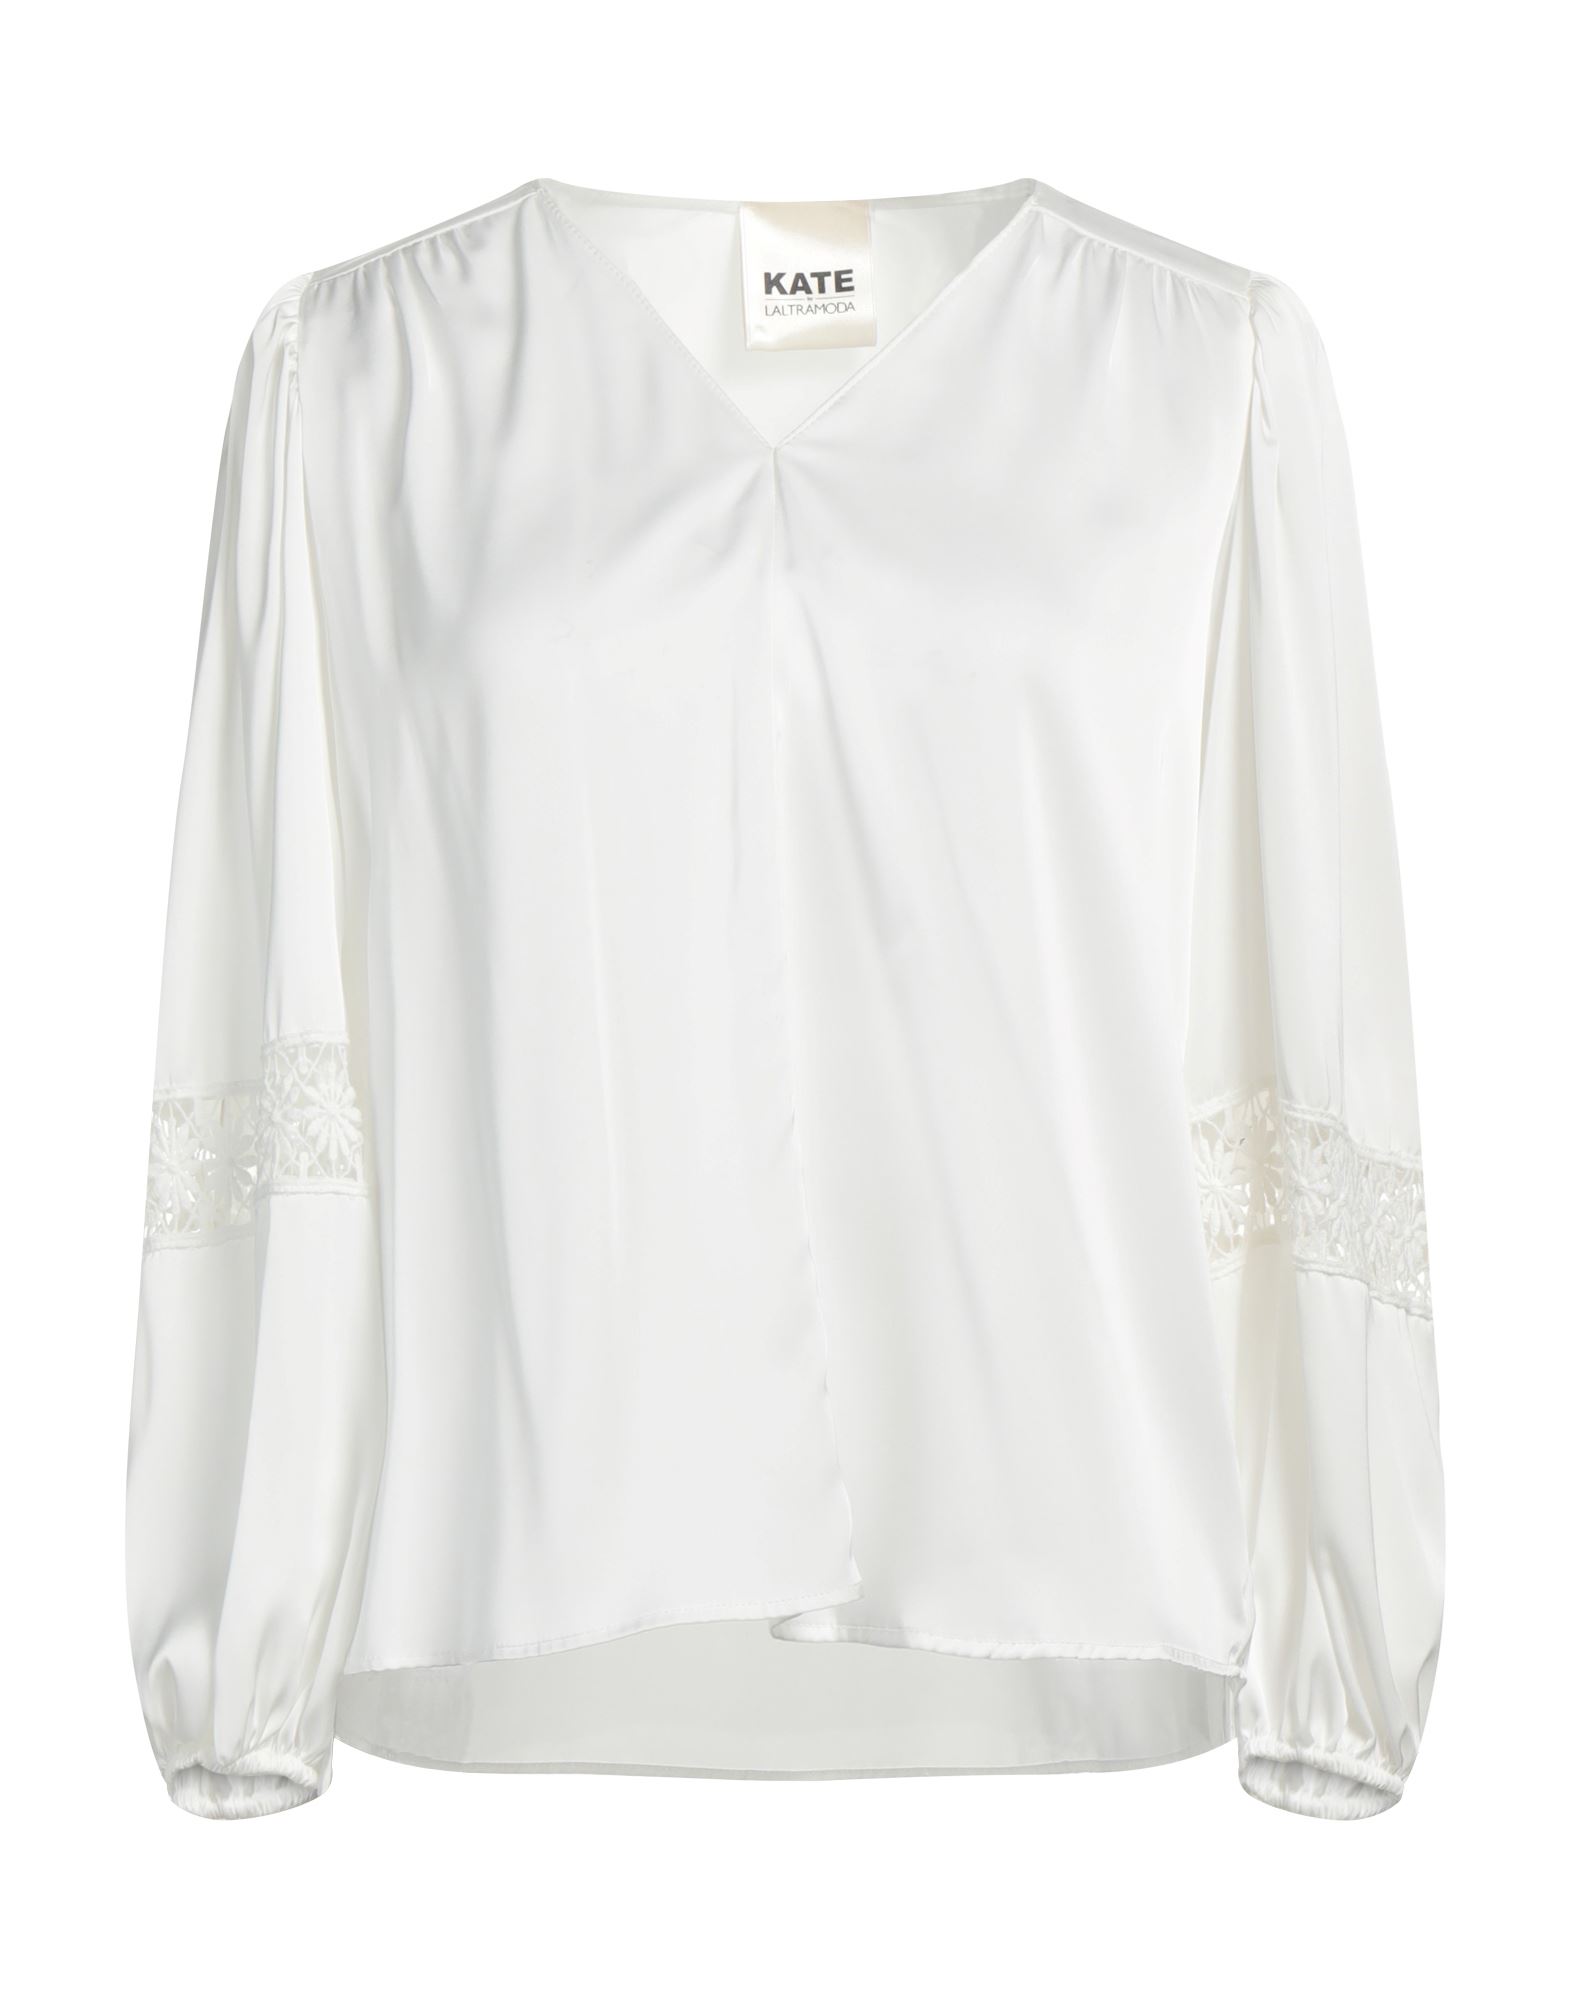 Kate By Laltramoda Blouses In White | ModeSens